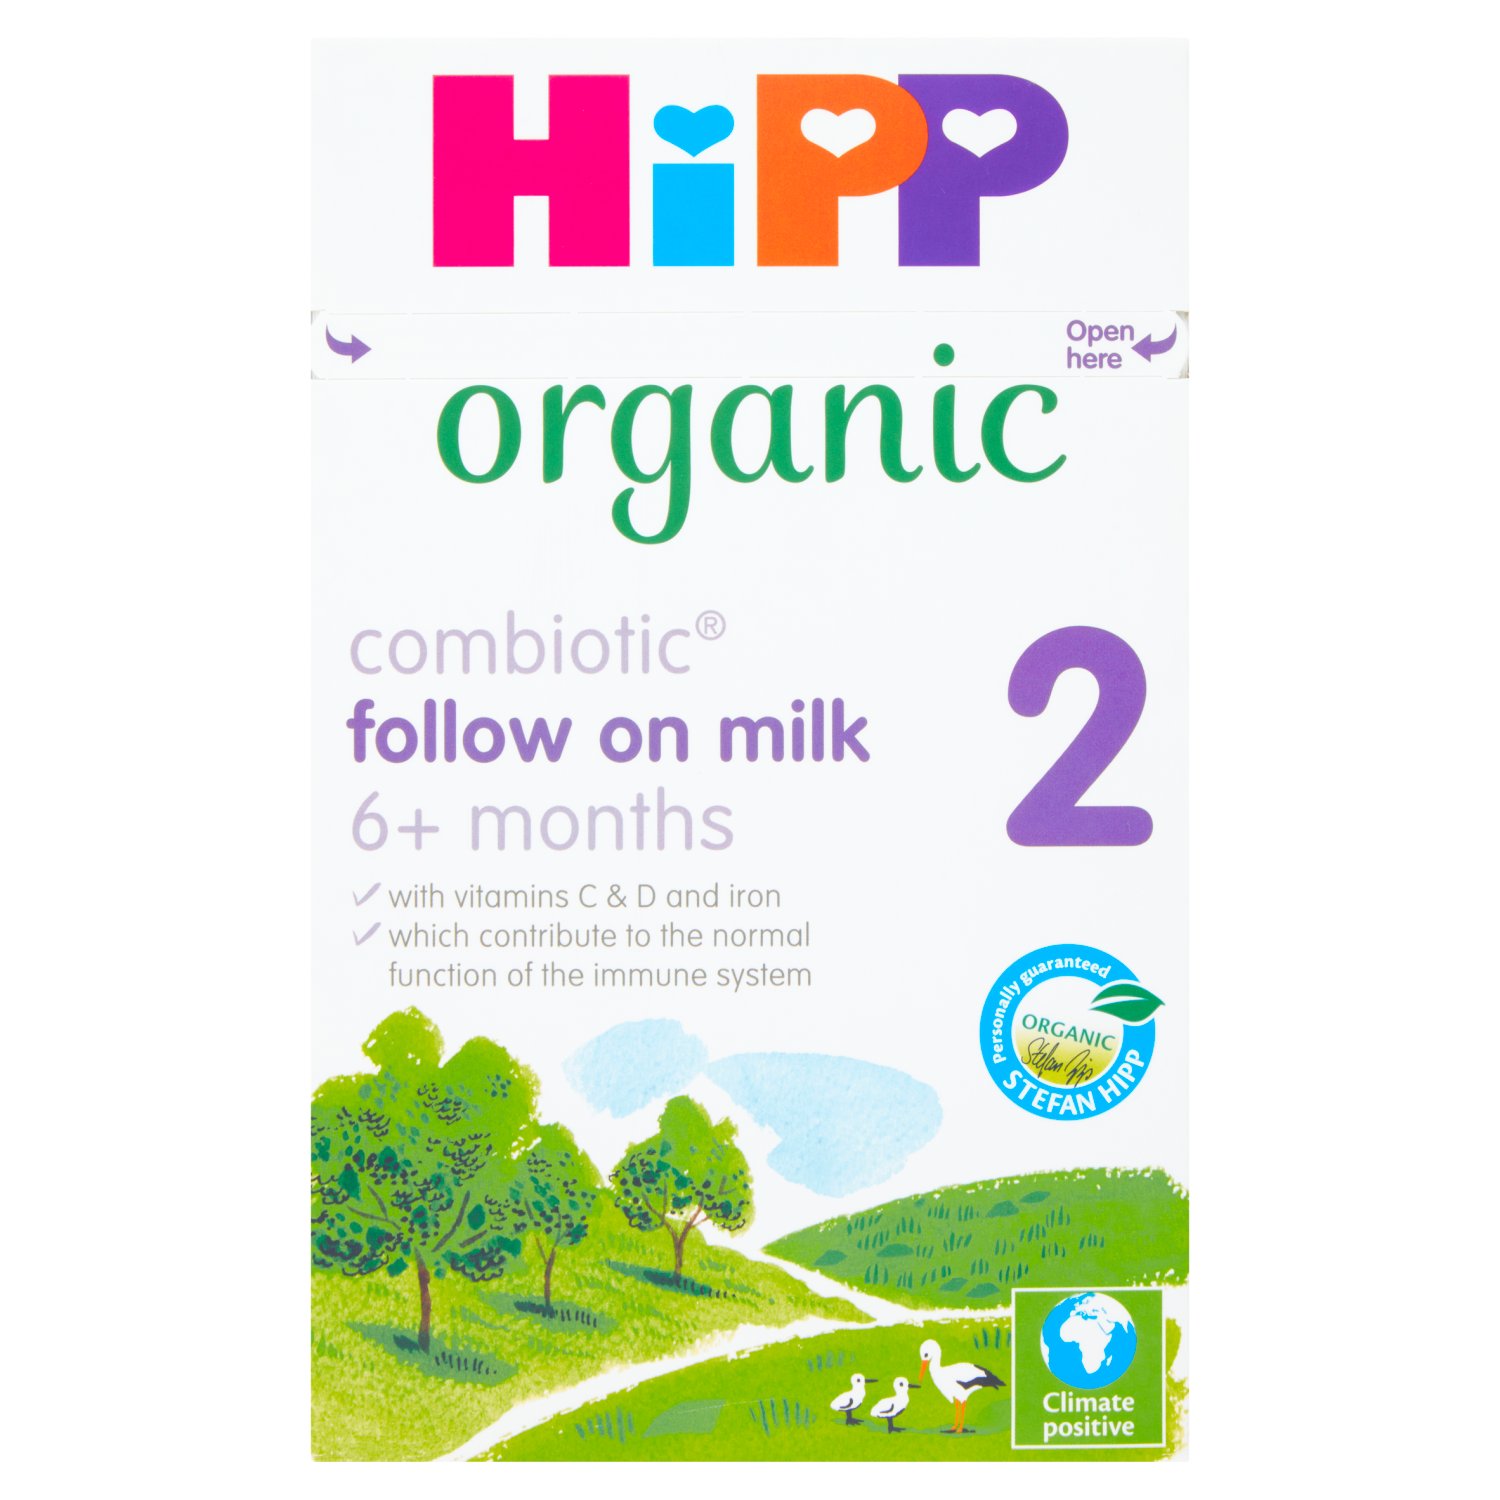 Organic baby milk from 6 months.
Organic follow on milk.